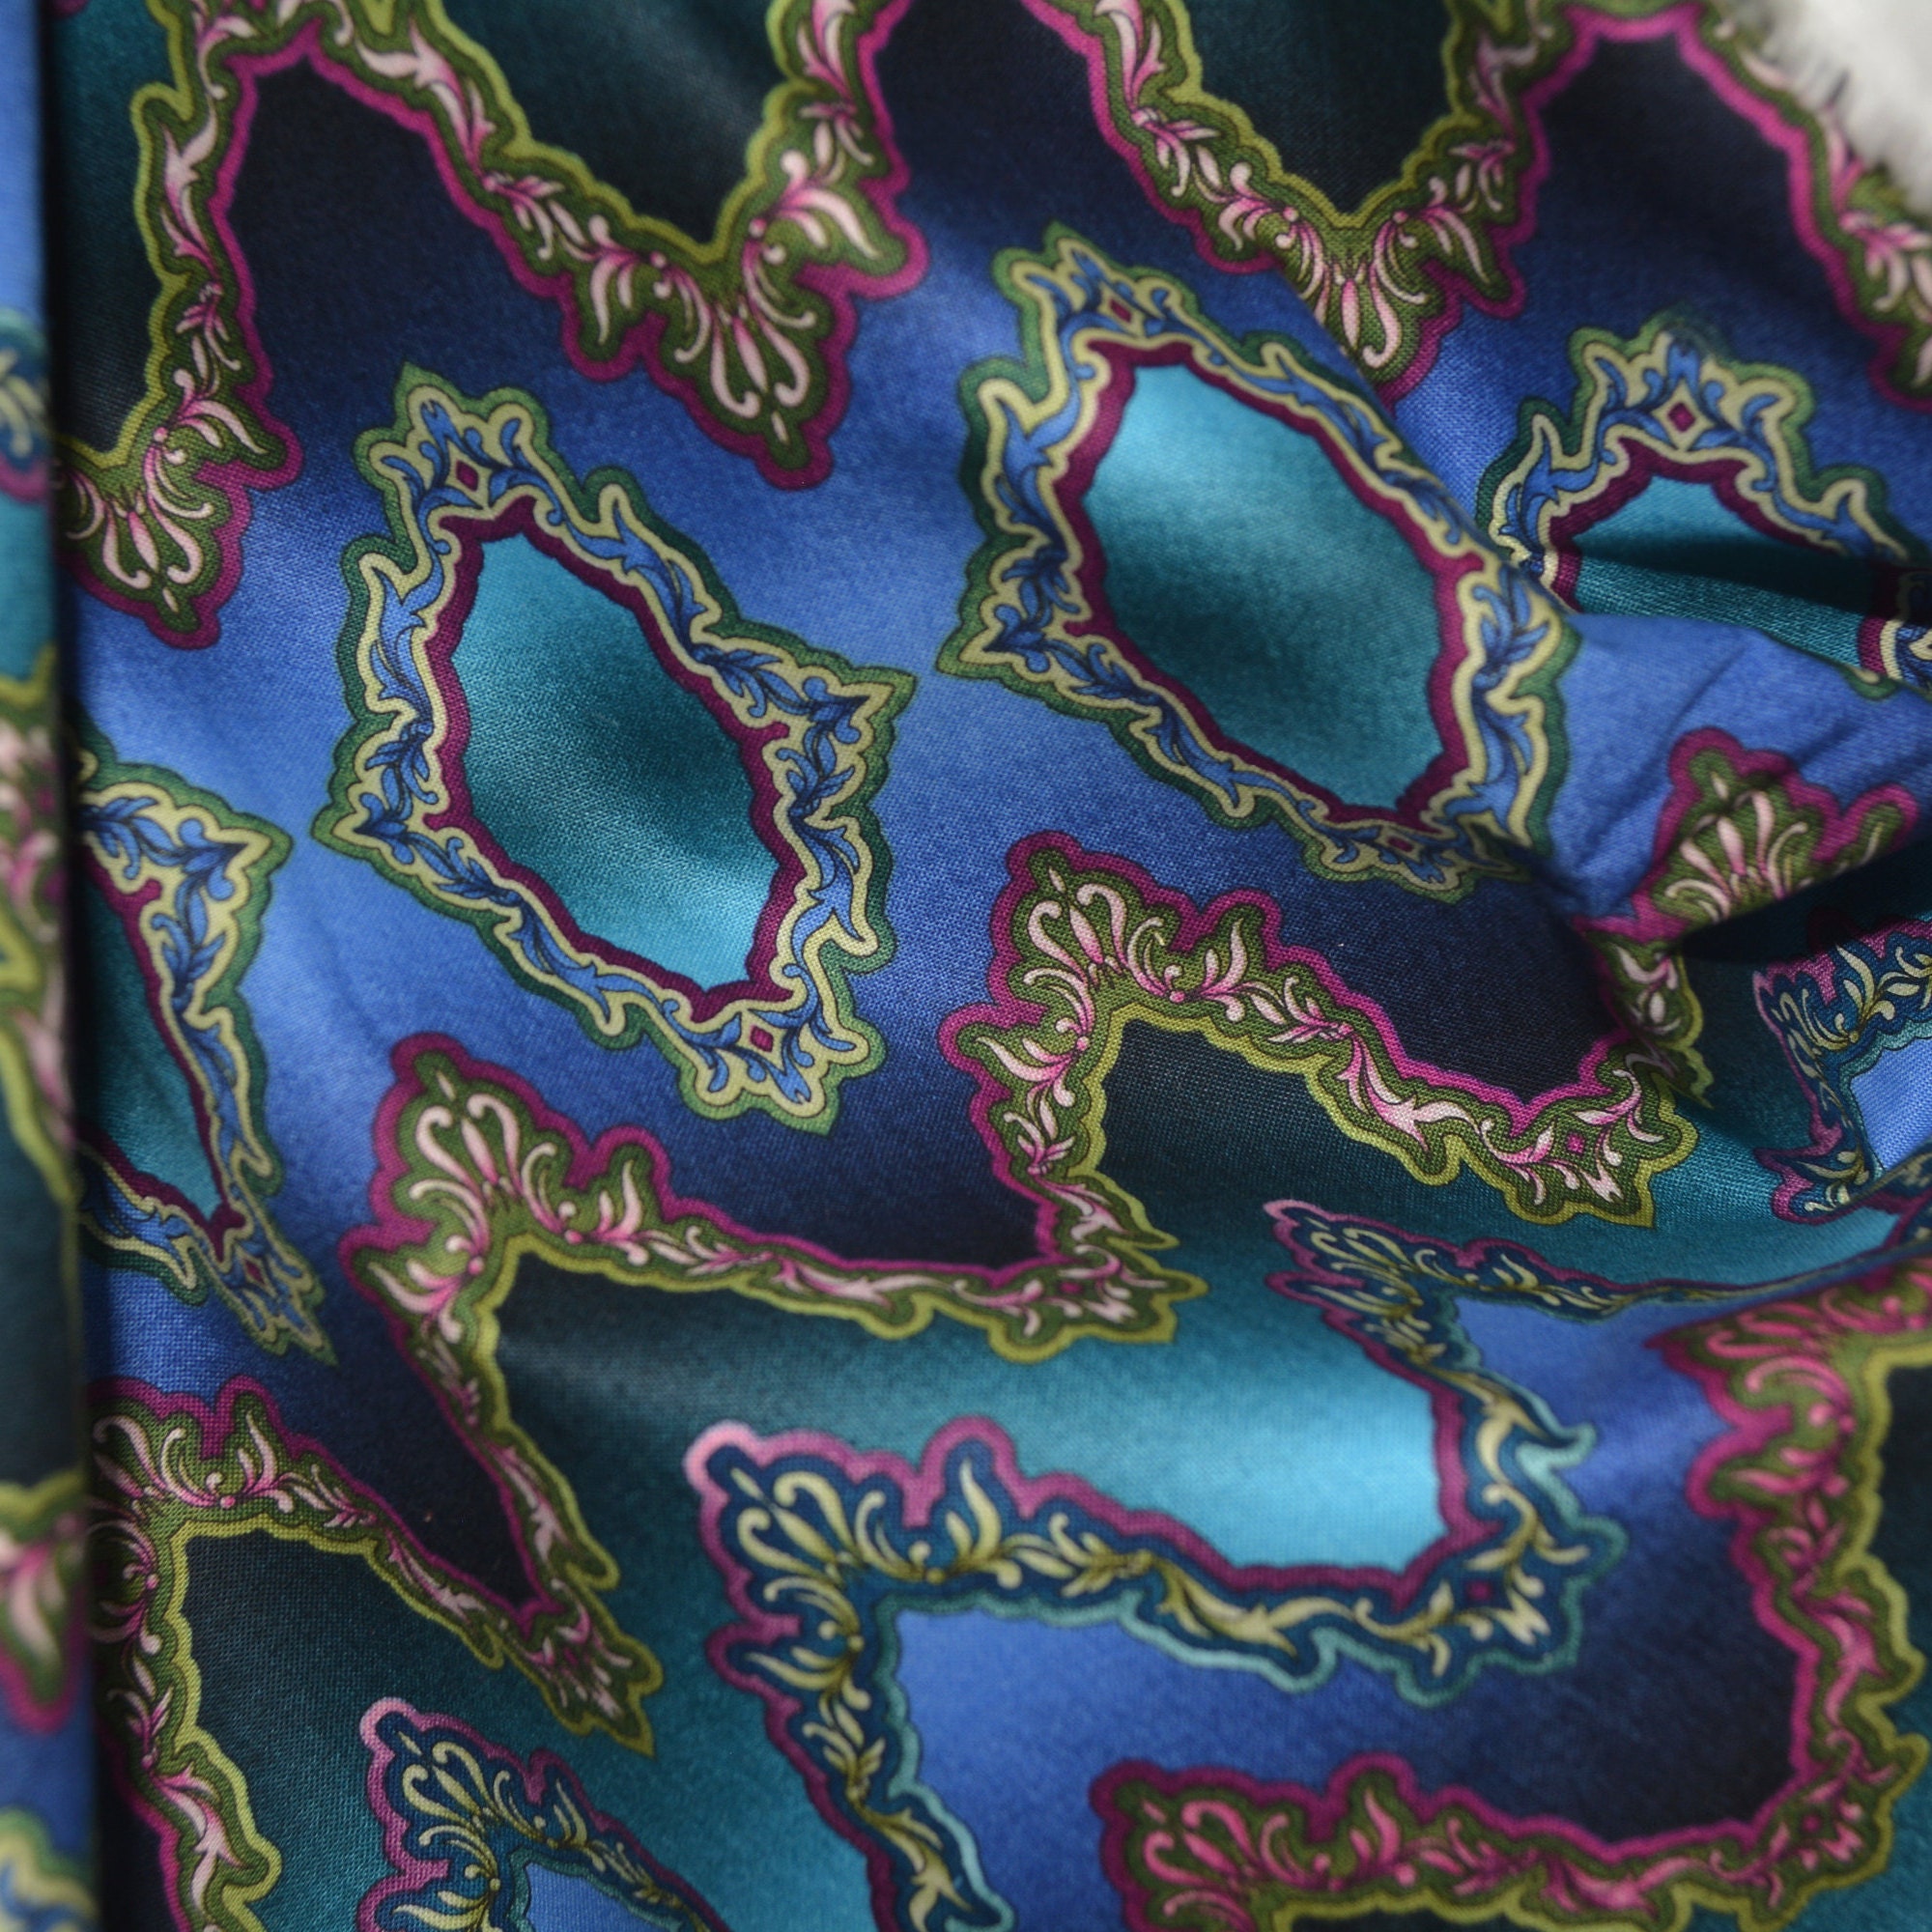 Benartex Paula Nadelstern fabric, Wacky Stripe, blue and purple